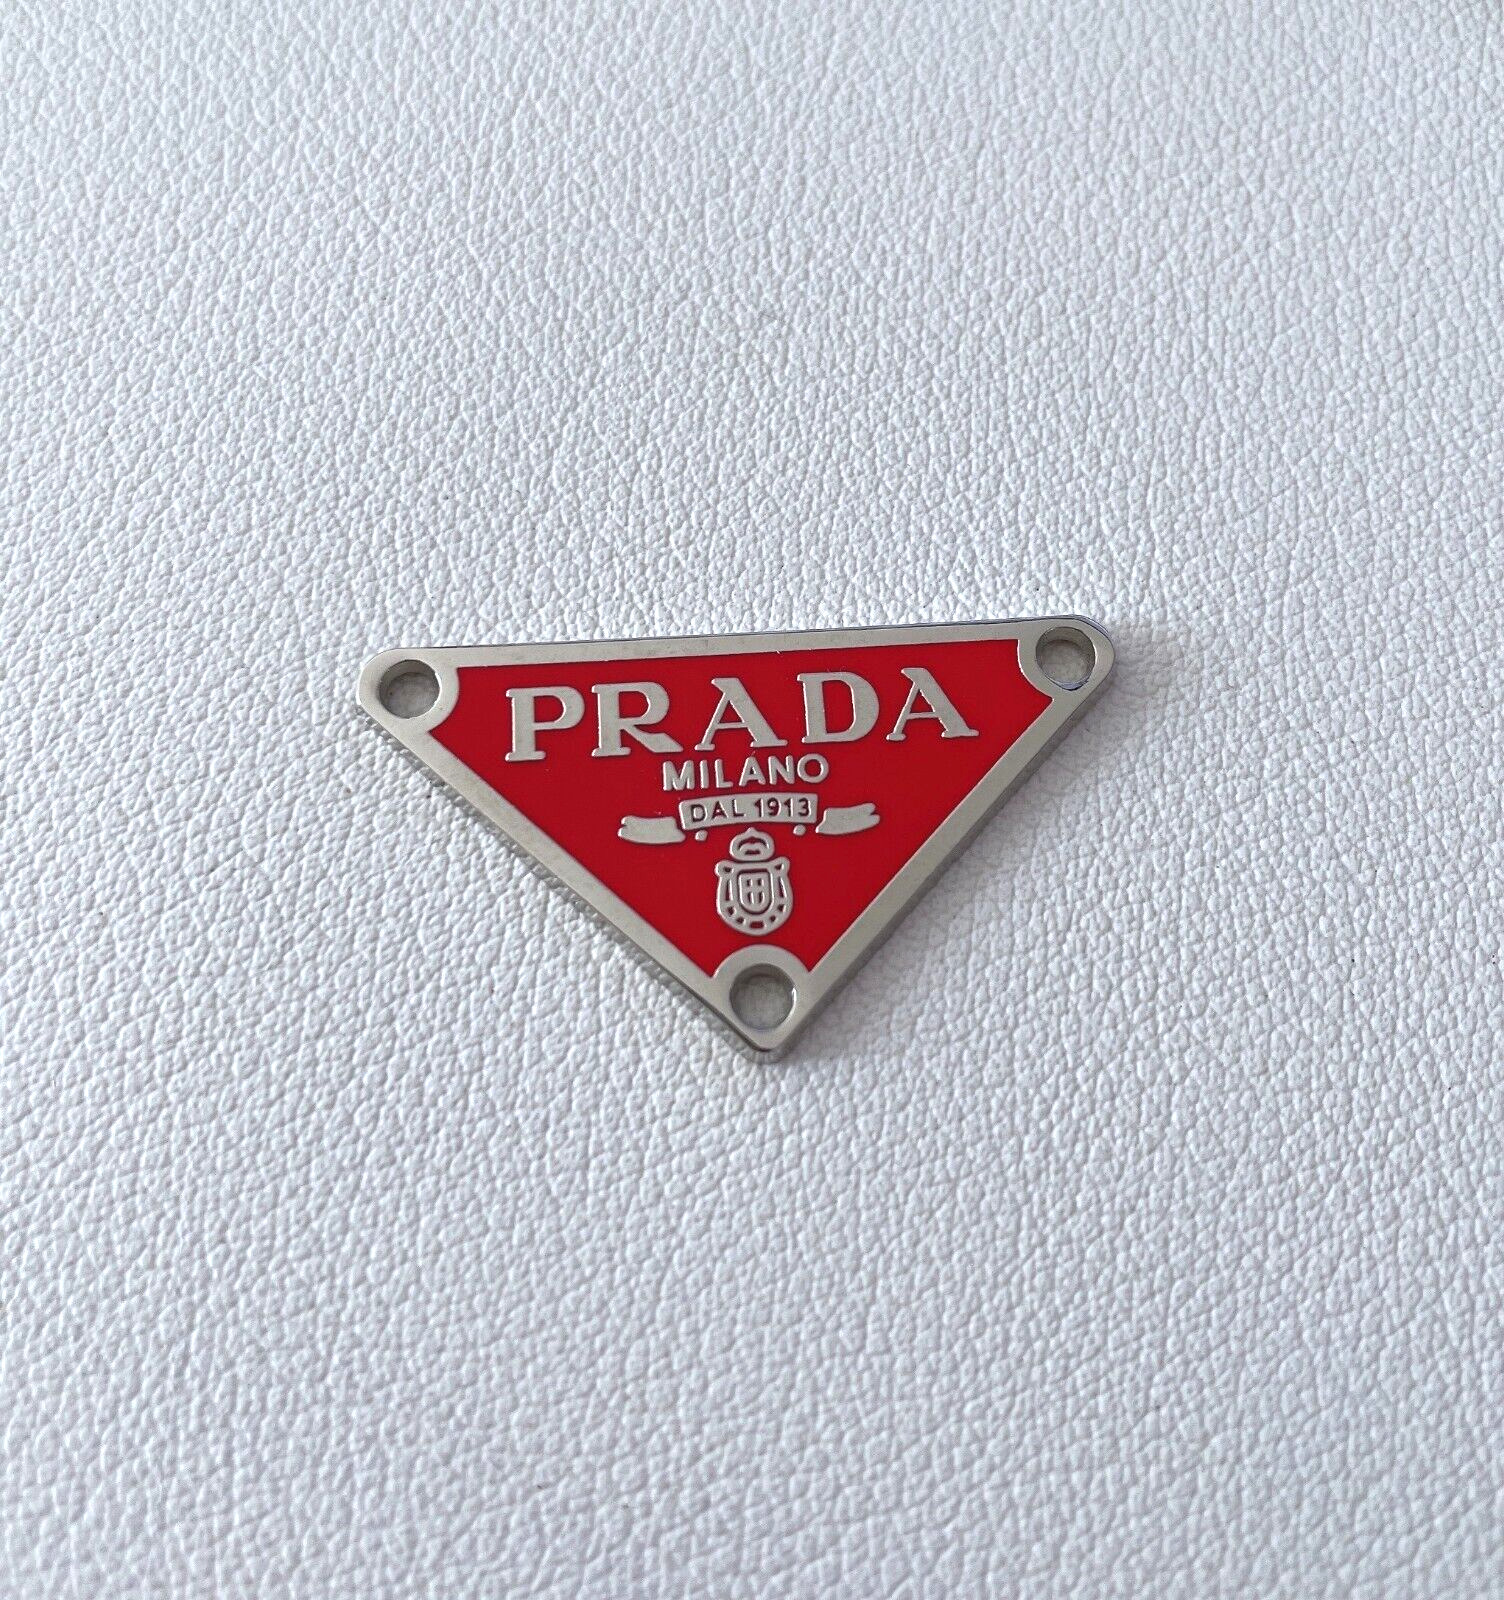 Red Prada Zip Pull, Triangle Plate, Rhodium Tone, 38mm